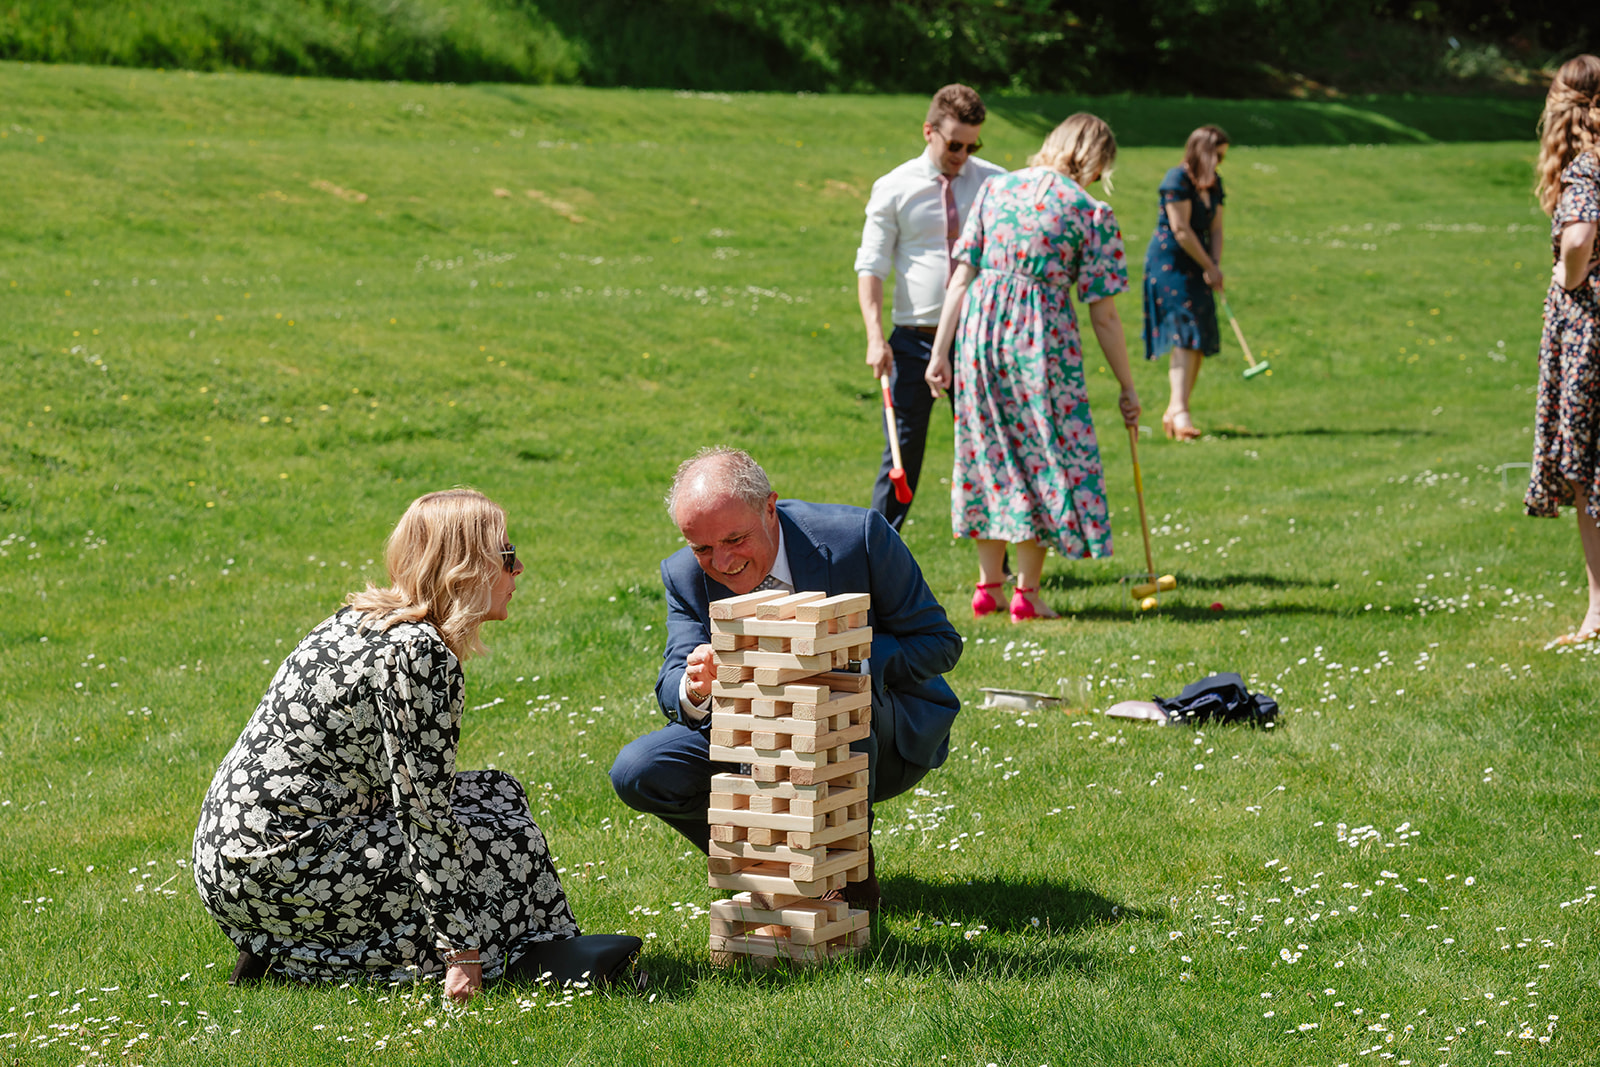 Dumbleton Hall Zara Davis Wedding Photography Worcestershire Gloucestershire Cotswolds garden lawn games jenga